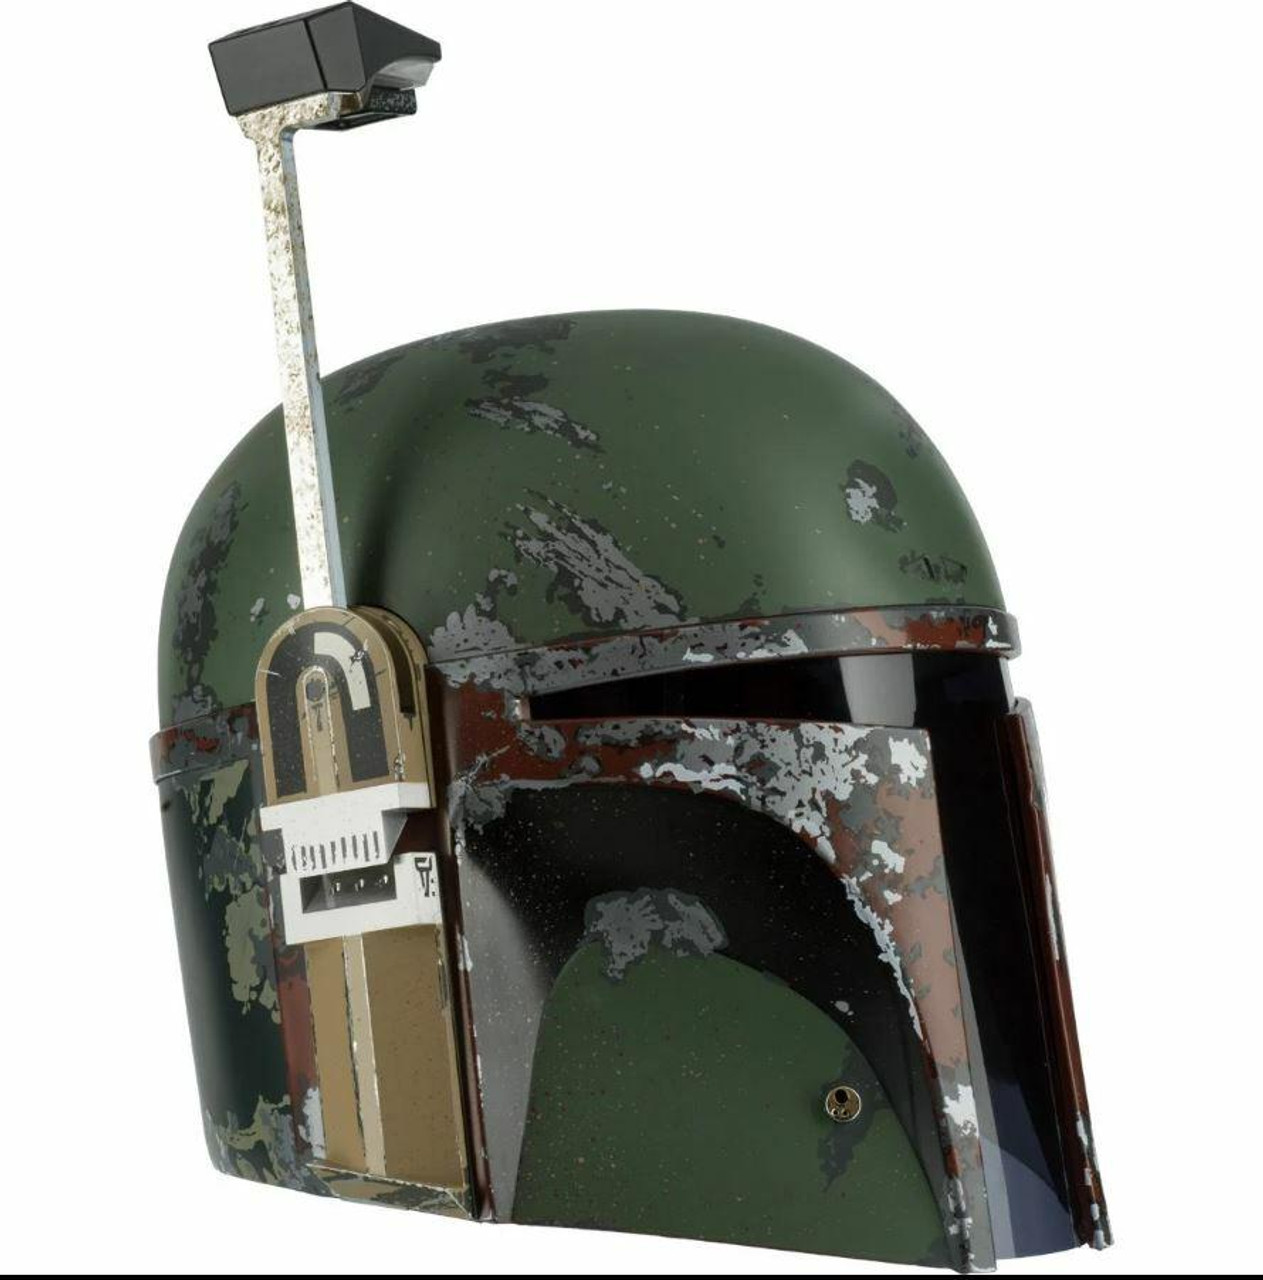 Details about   1/6 Scale Toy Star Wars Boba Fett Weathered Helmet w/Range Finder 